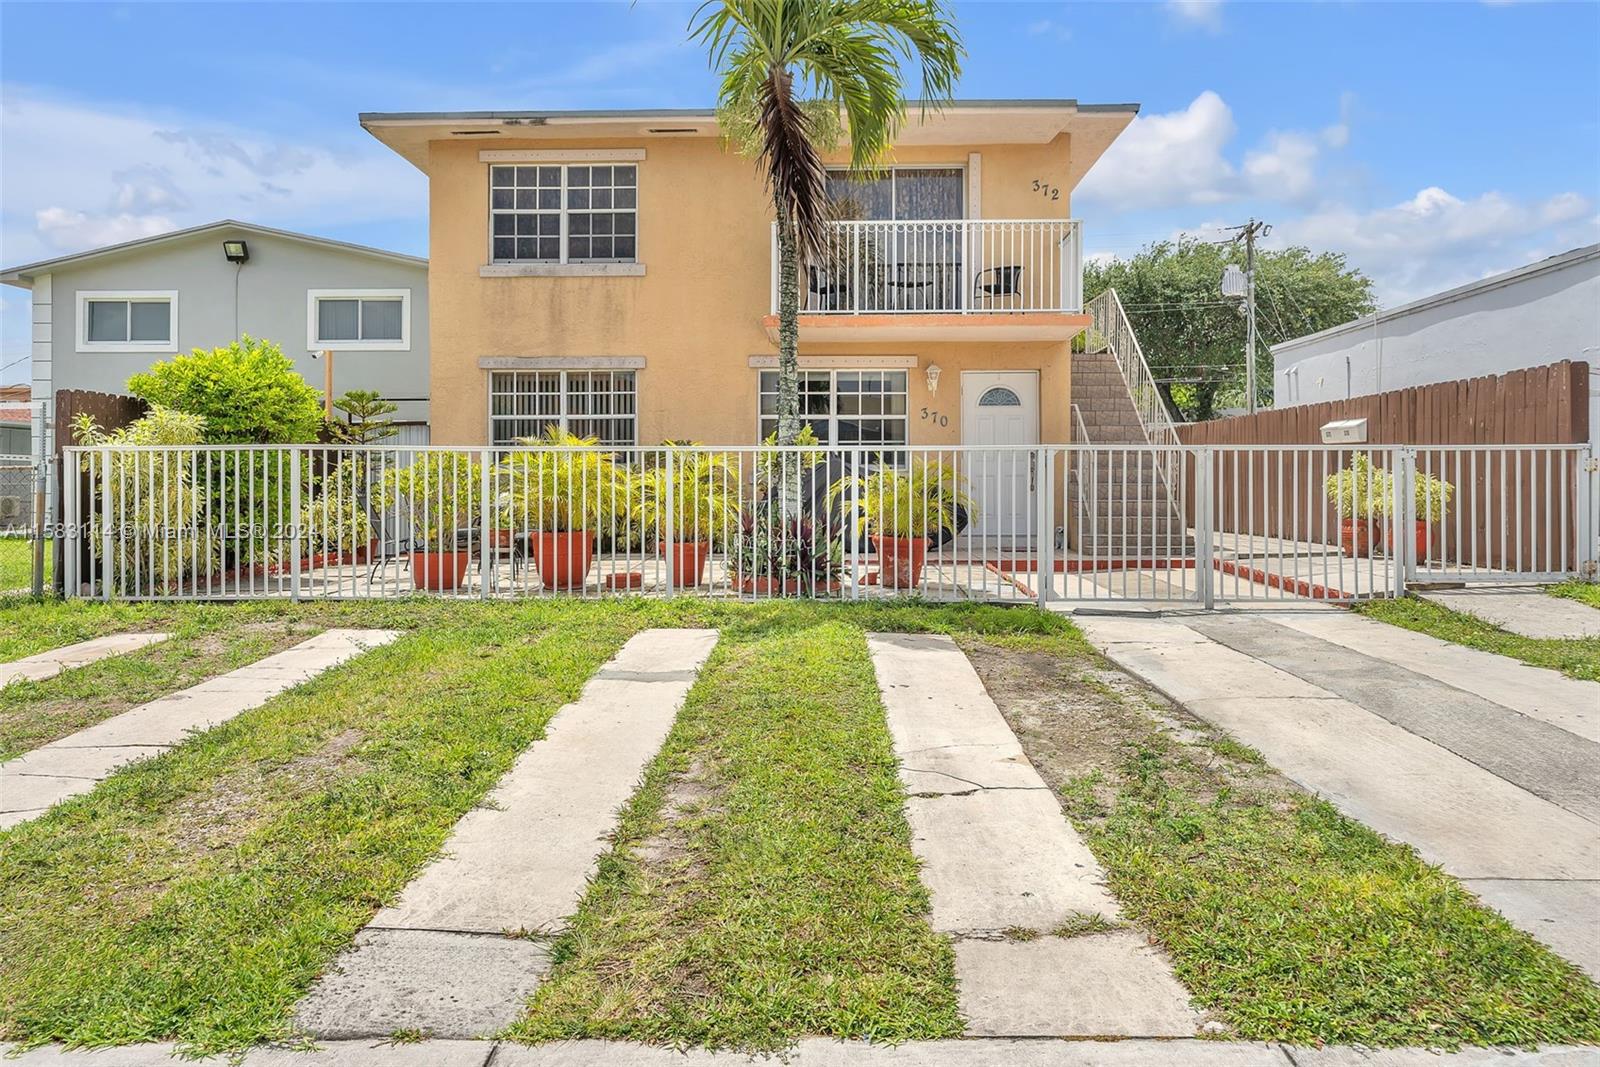 Rental Property at 370 W 19th St St, Hialeah, Miami-Dade County, Florida -  - $2,599,900 MO.